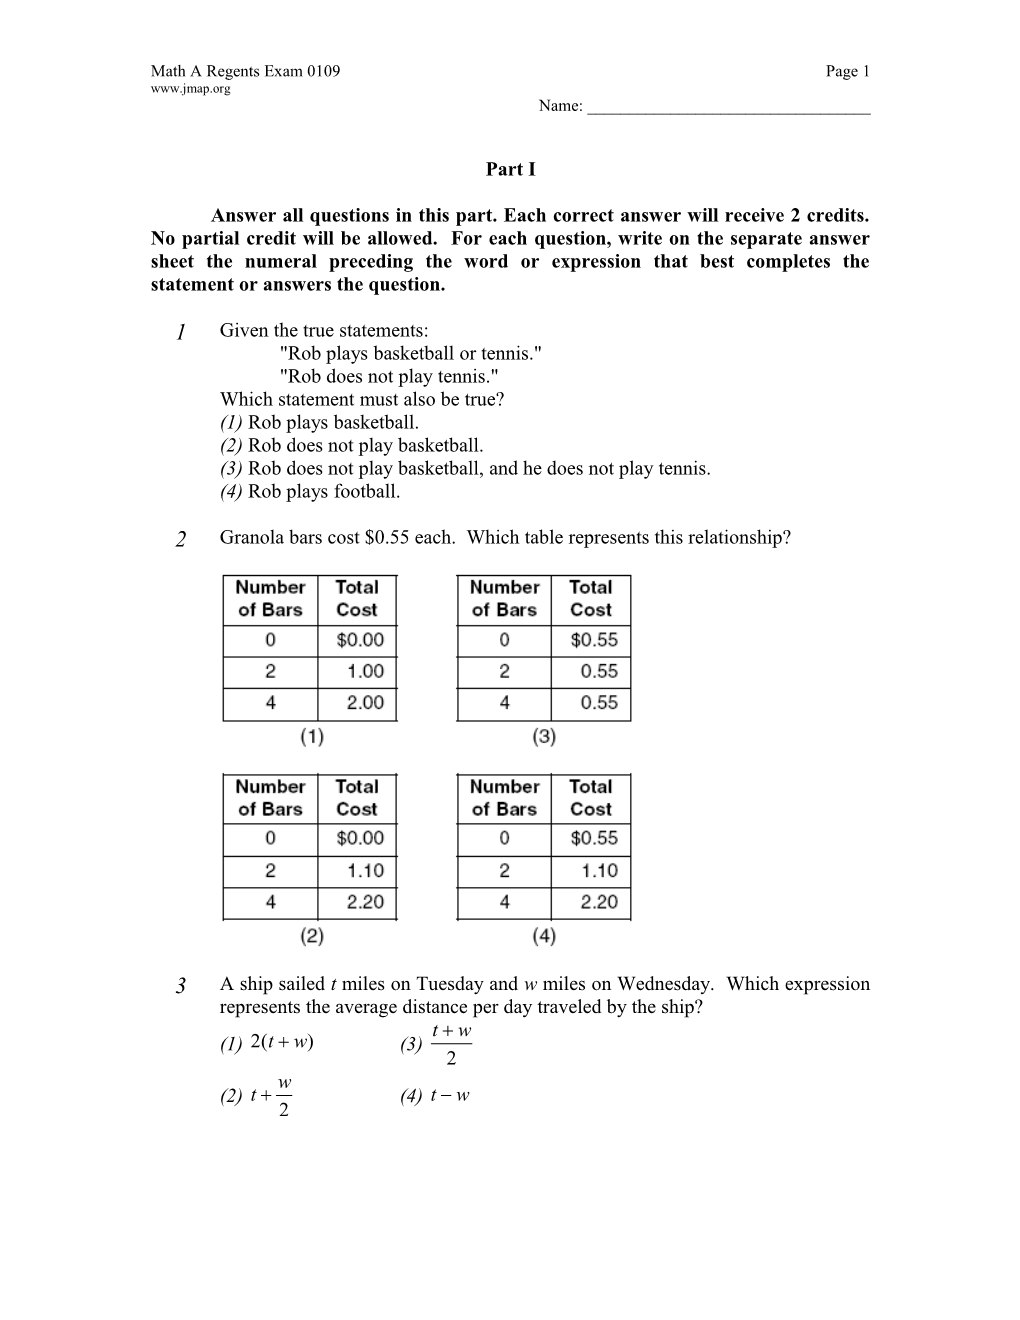 January 2009 Math a Regents Exam